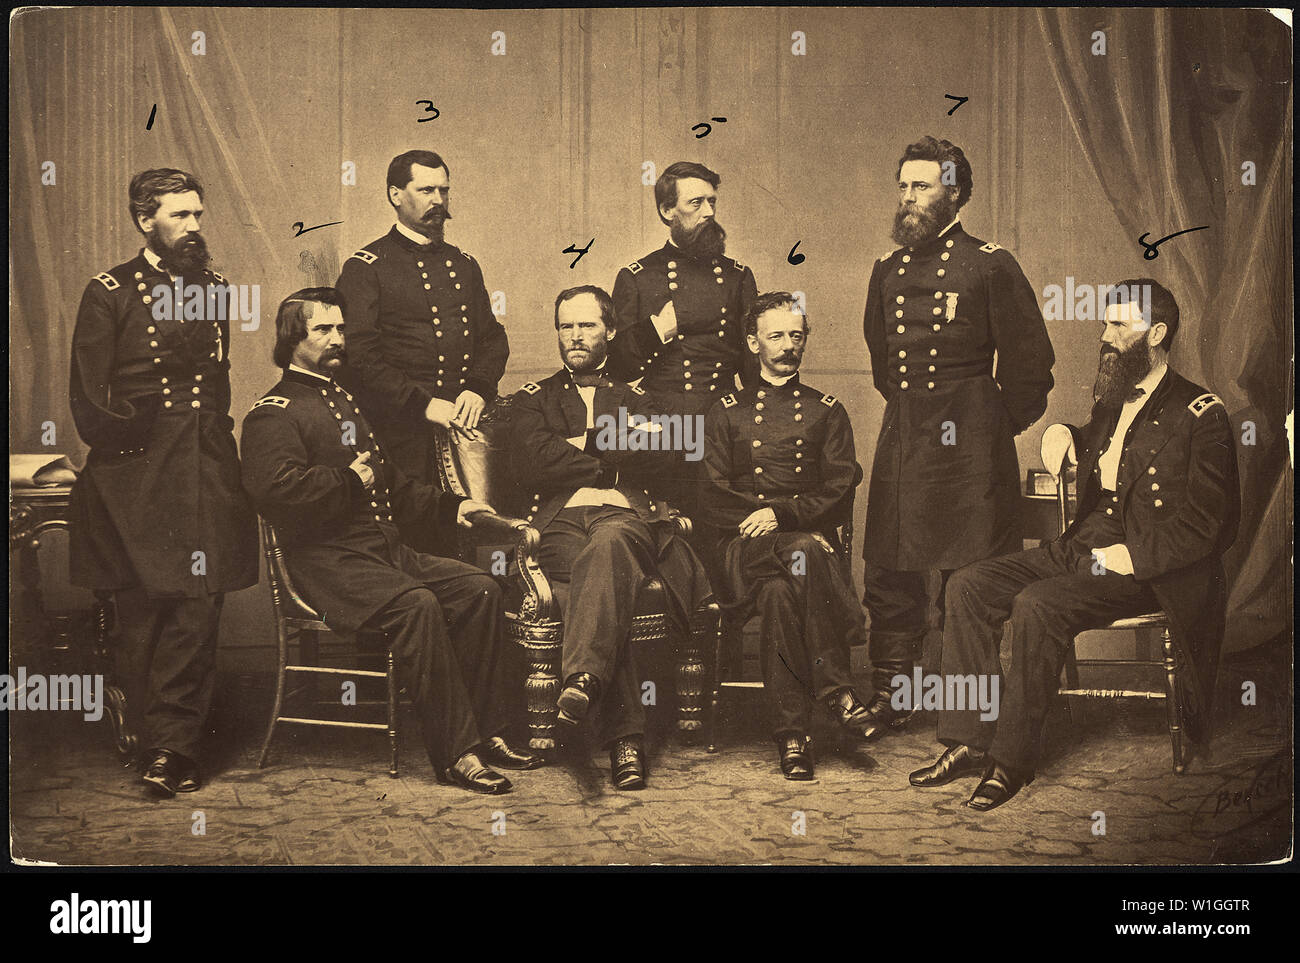 Major General William T. Sherman, Commanding Military Division of the Mississippi, and his Generals: 1. Maj. Gen. O. O. Howard; 2. Maj. Gen. J. A. Logan; 3. Maj. Gen. William B. Hazen; 4. Maj. Gen. William T. Sherman; 5. Maj. Gen. Jeff C. Davis; 6. Maj. Gen. H. W. Slocum; 7. Maj. Gen. J. A. Mower; 8. Maj. Gen. F. P. Blair. Stock Photo